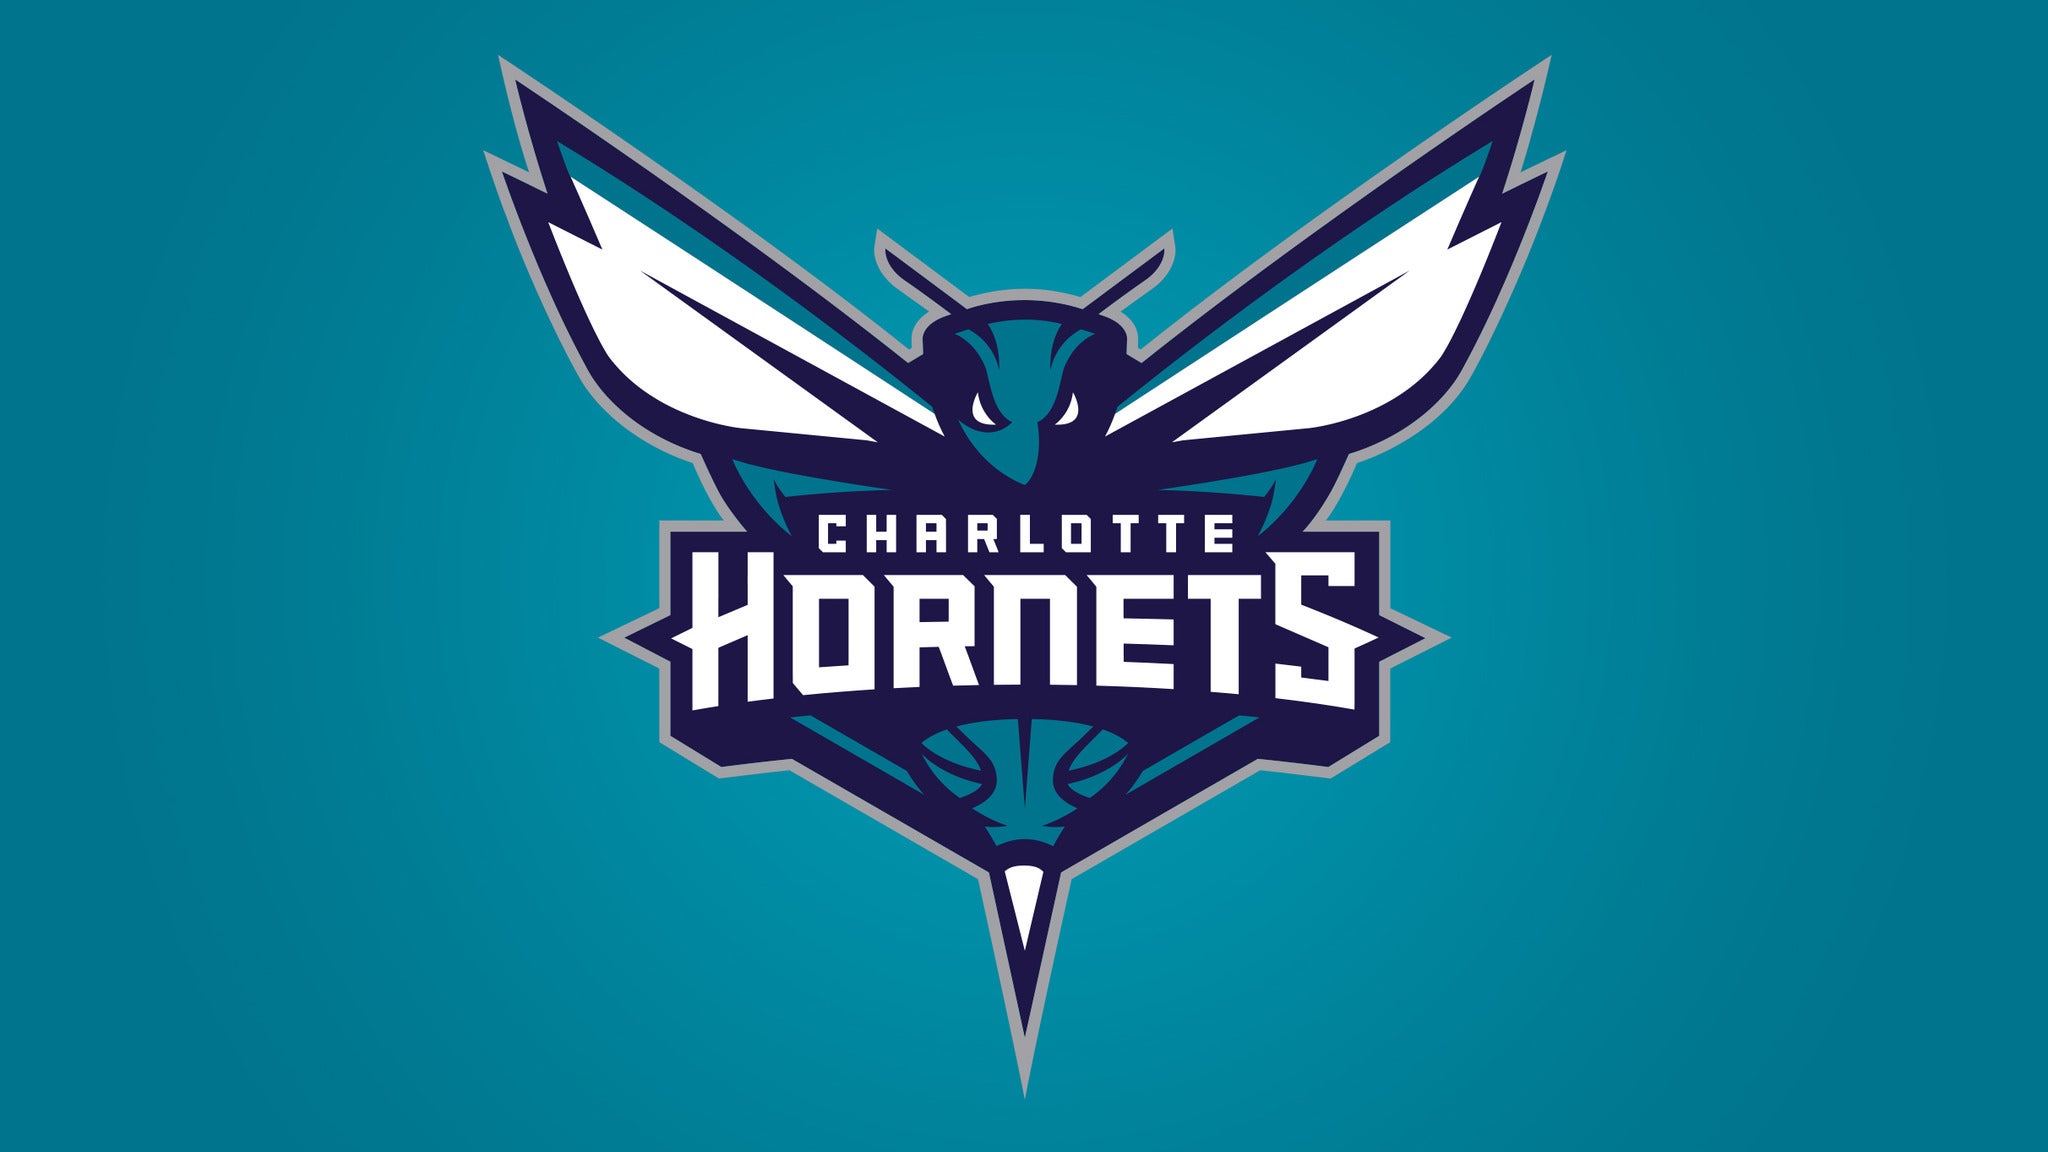 Charlotte Hornets presale information on freepresalepasswords.com